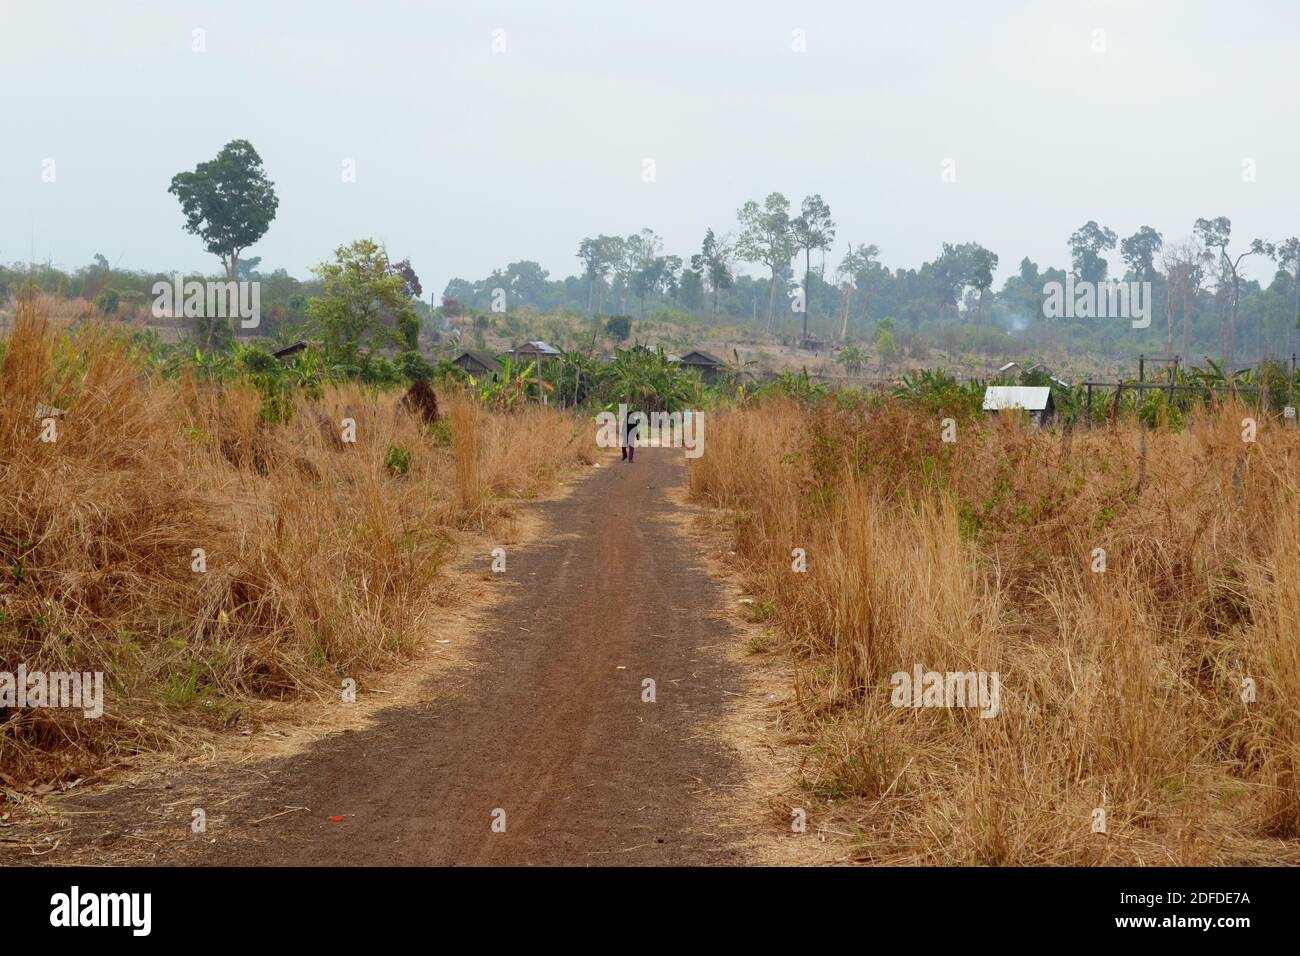 Gerade Landstraße entlang trockener Grasfelder. Landschaftspfad durch Wüstenlandschaft. Karges Land und trockenes Klima. Kambodscha Stockfoto